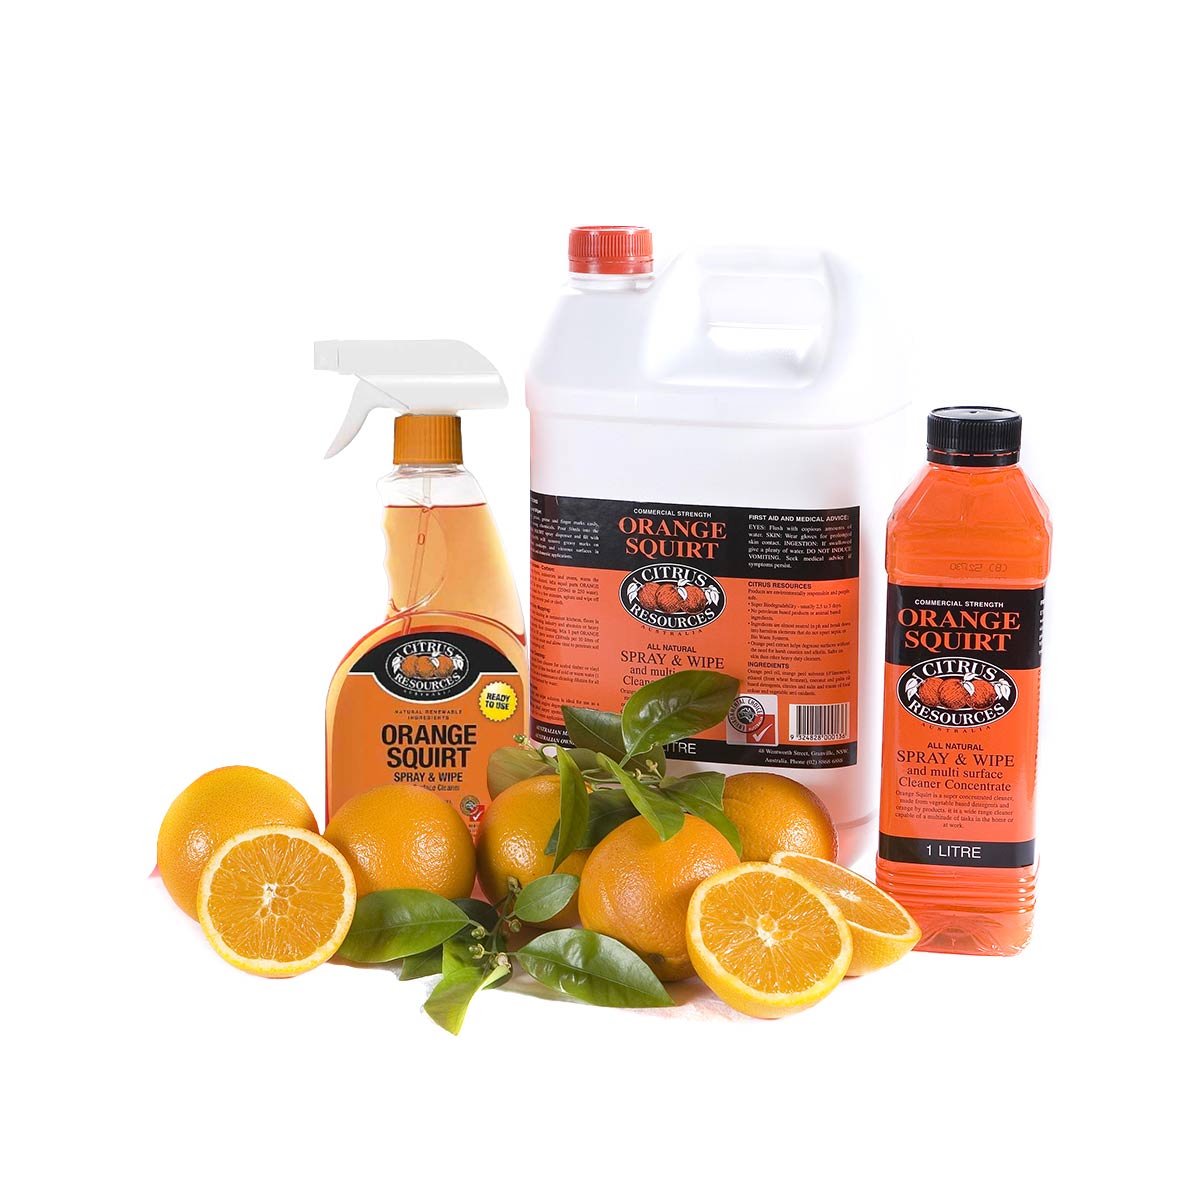 Orange Squirt Spray & Wipe